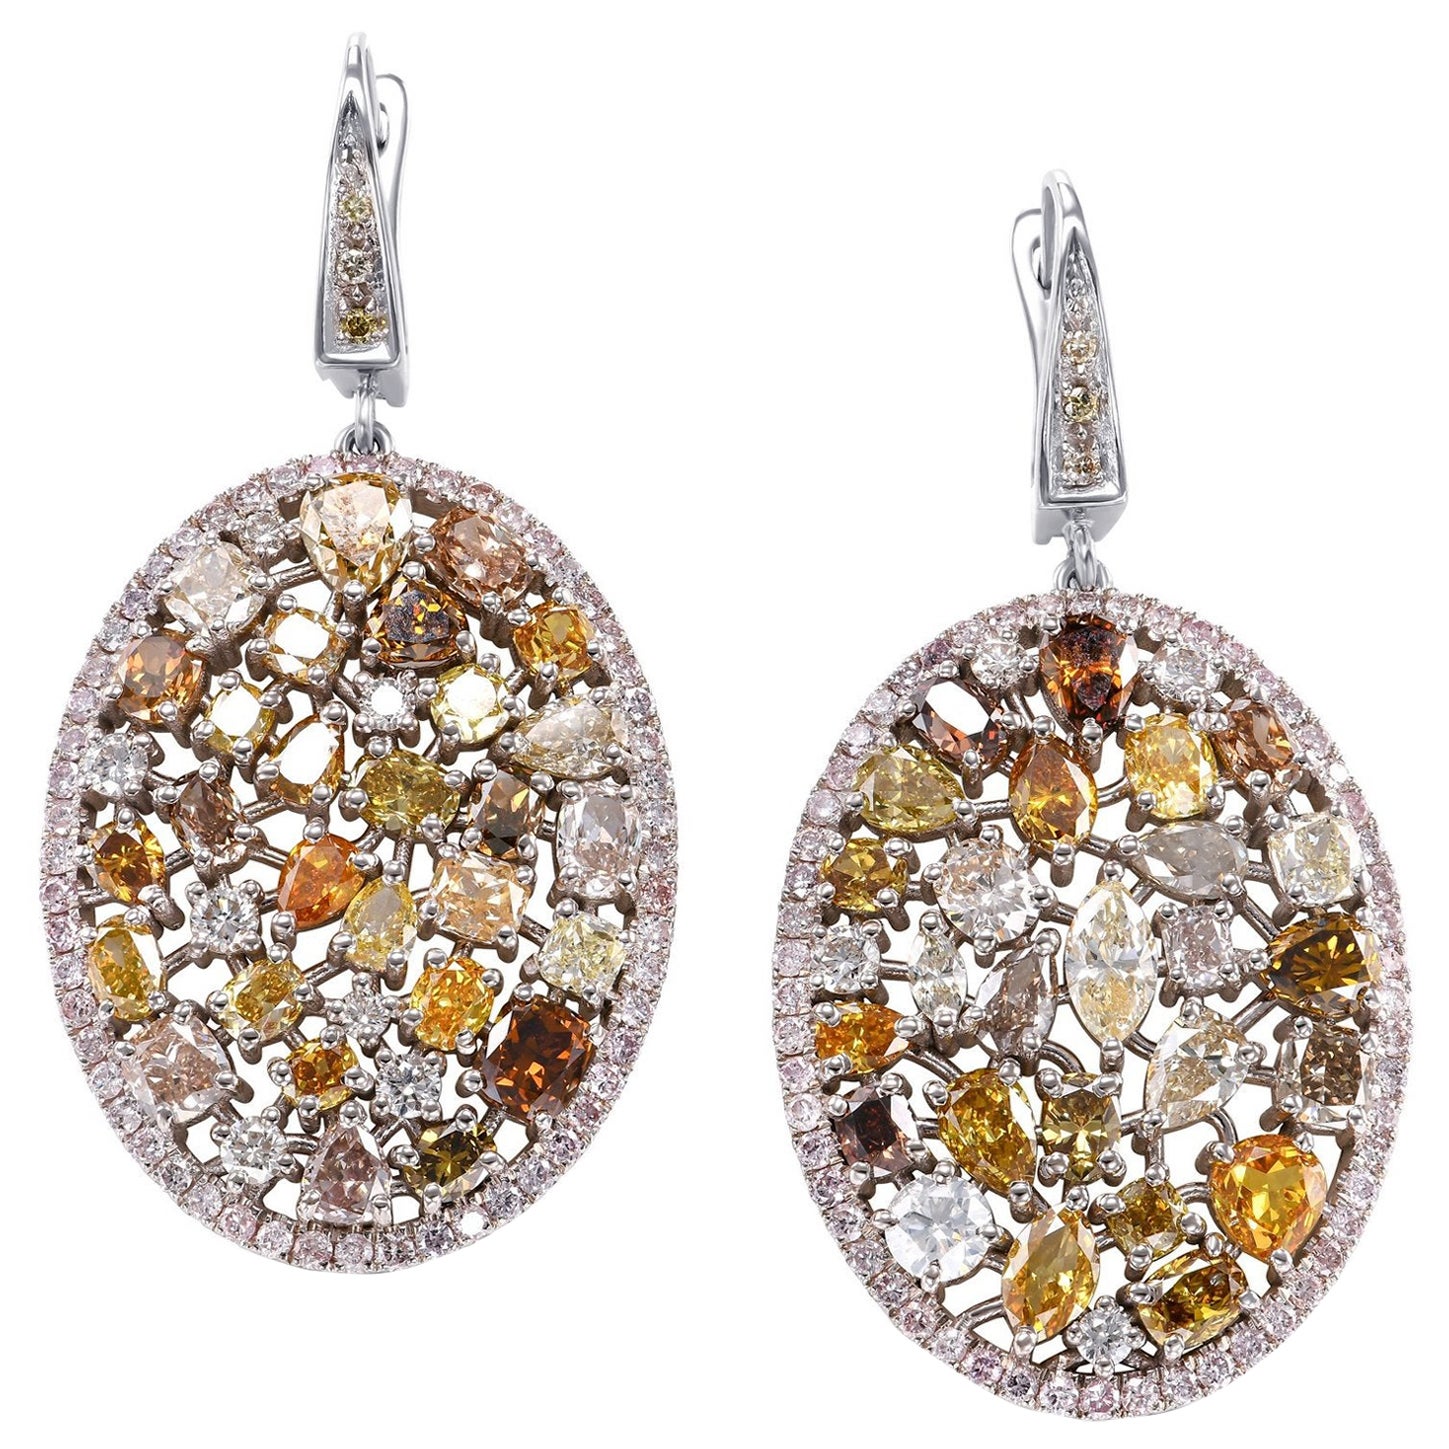 NO RESERVE!  -  11.75cttw Fancy Color Diamonds - 14K White Gold Earrings For Sale